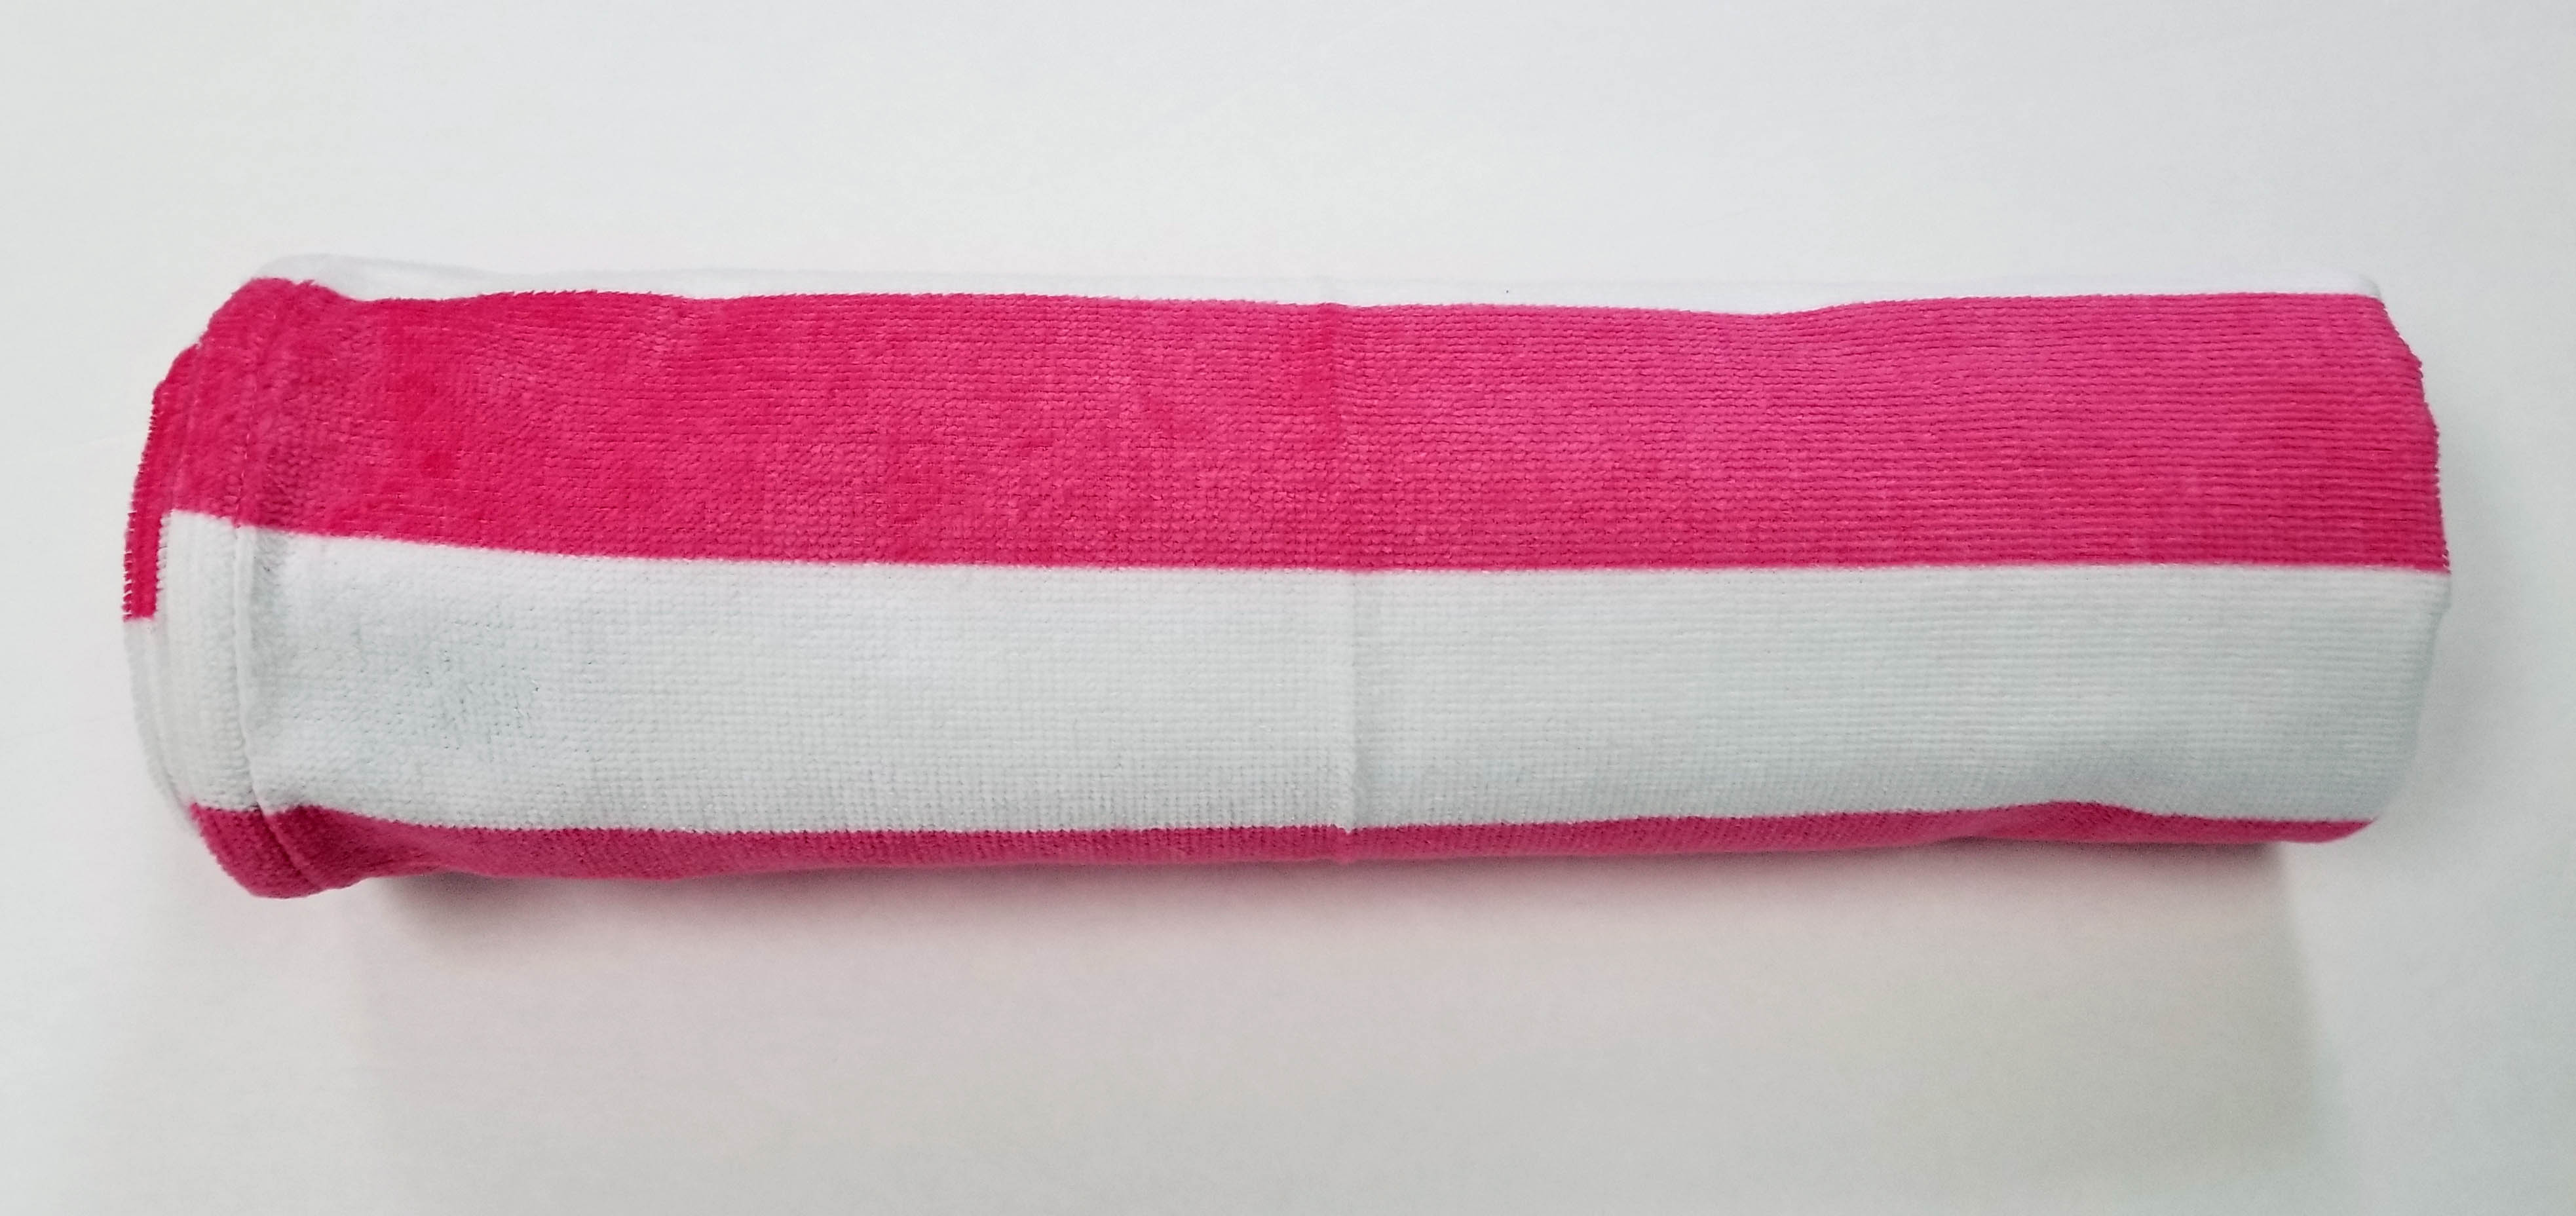 SILKSCREEN 30x60 Pink Cabana Striped Beach Towel Bahia Collection by D&oumlhler.